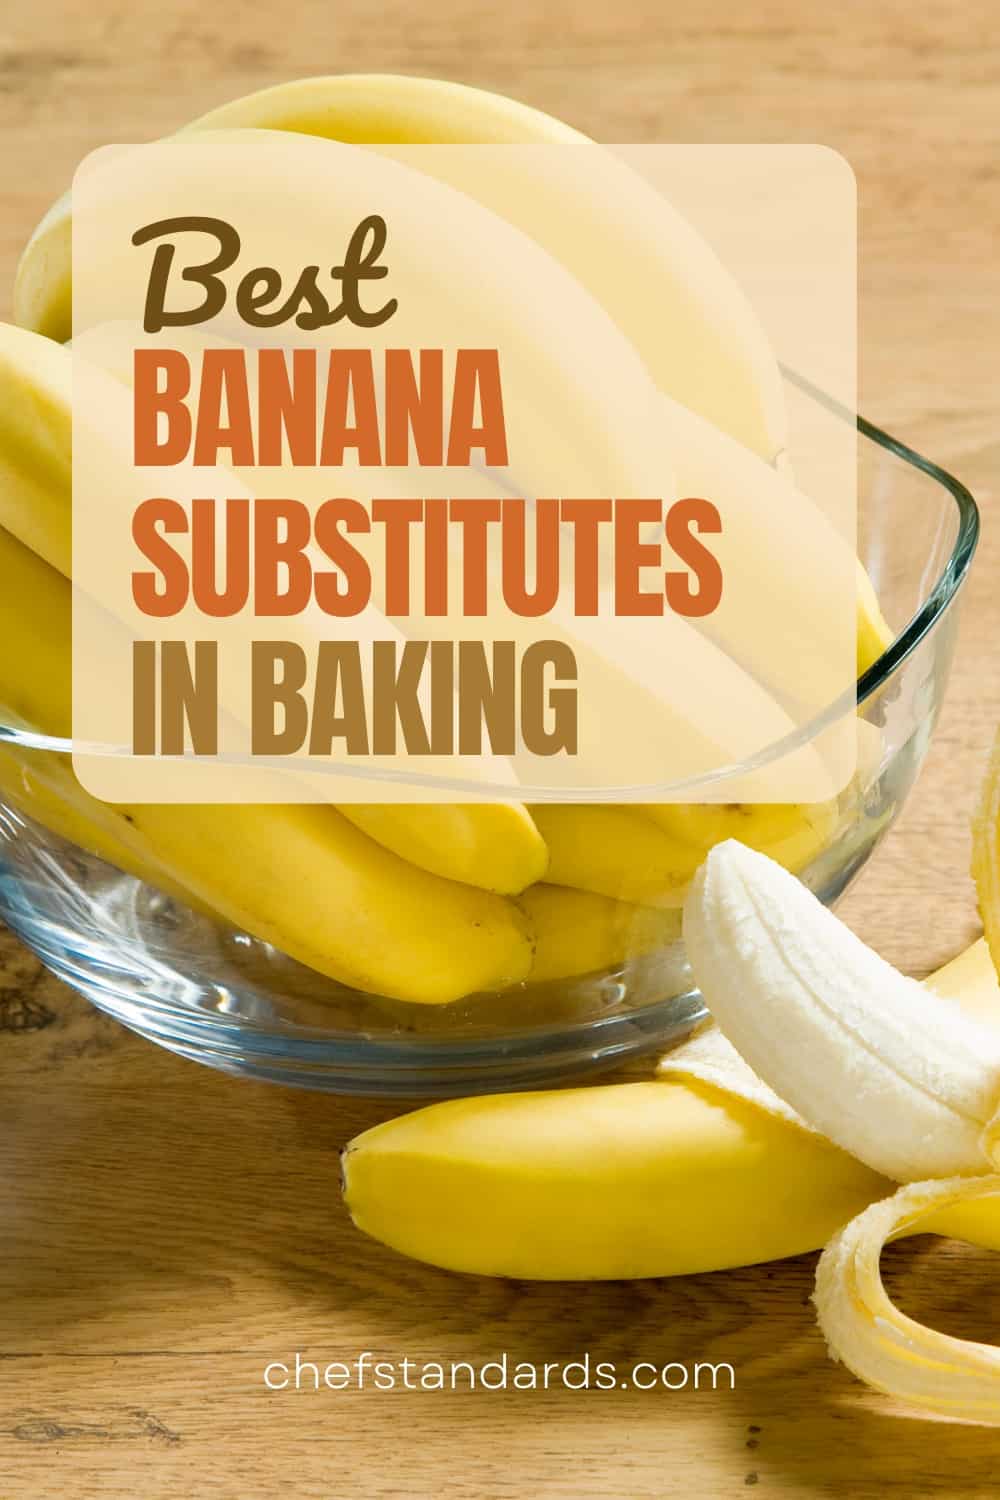 best banana substitutes in baking pinterest image